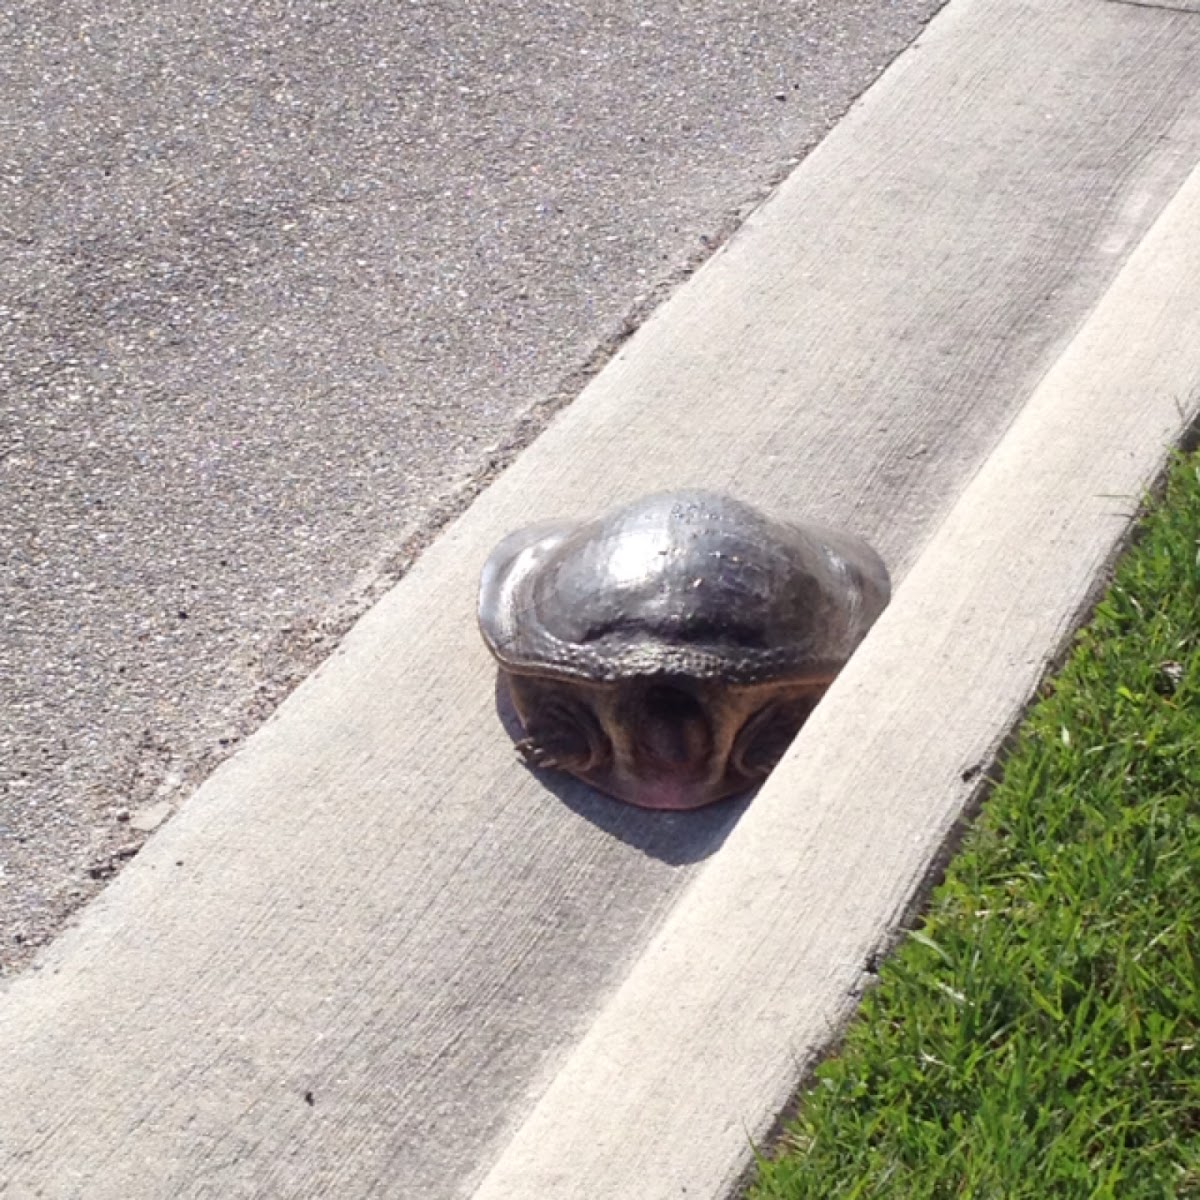 Florida soft shell turtle